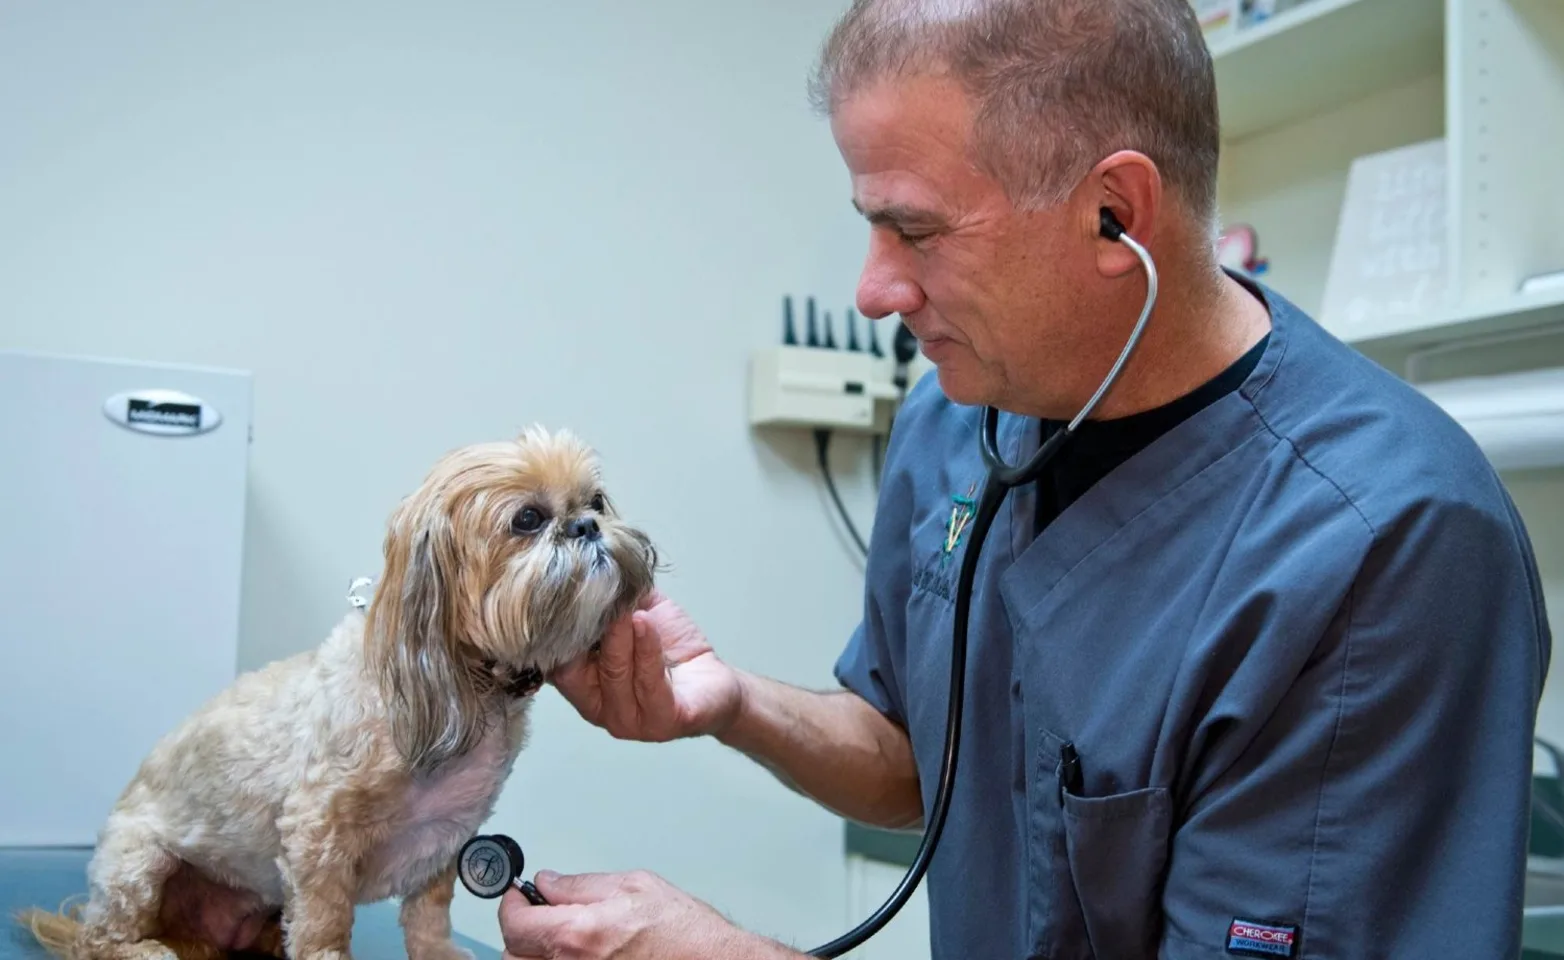 Dr. McAbee examining a dog